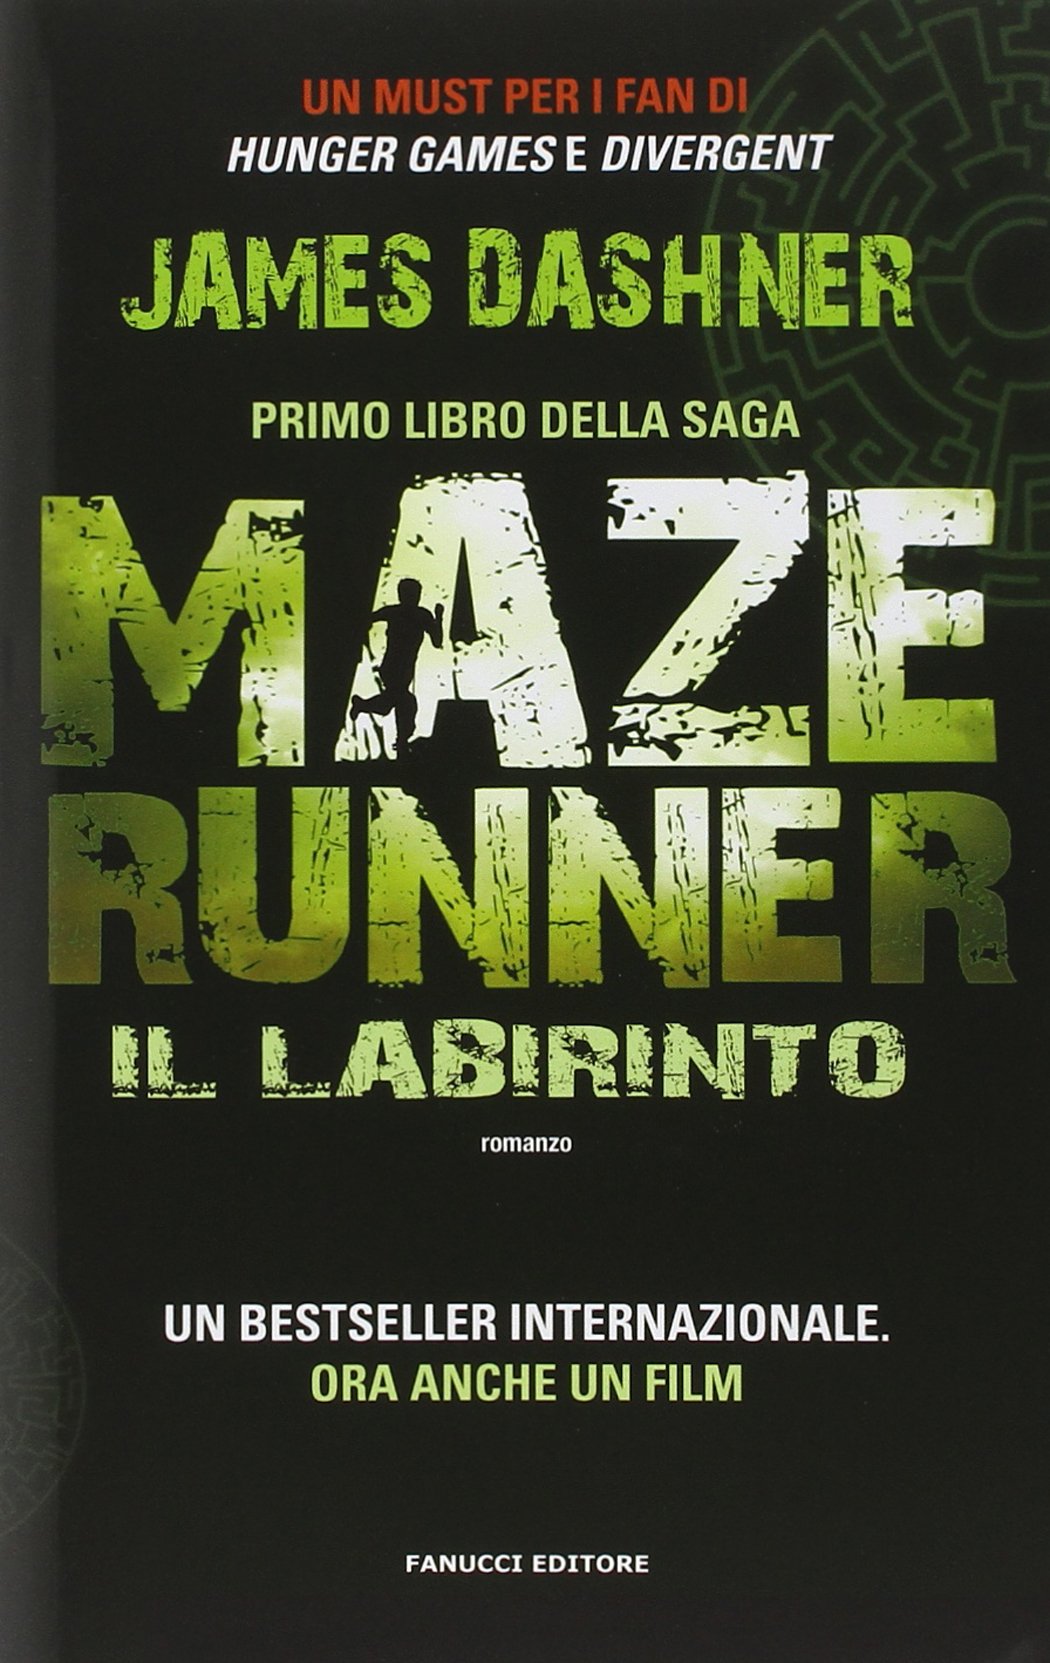 Maze runner